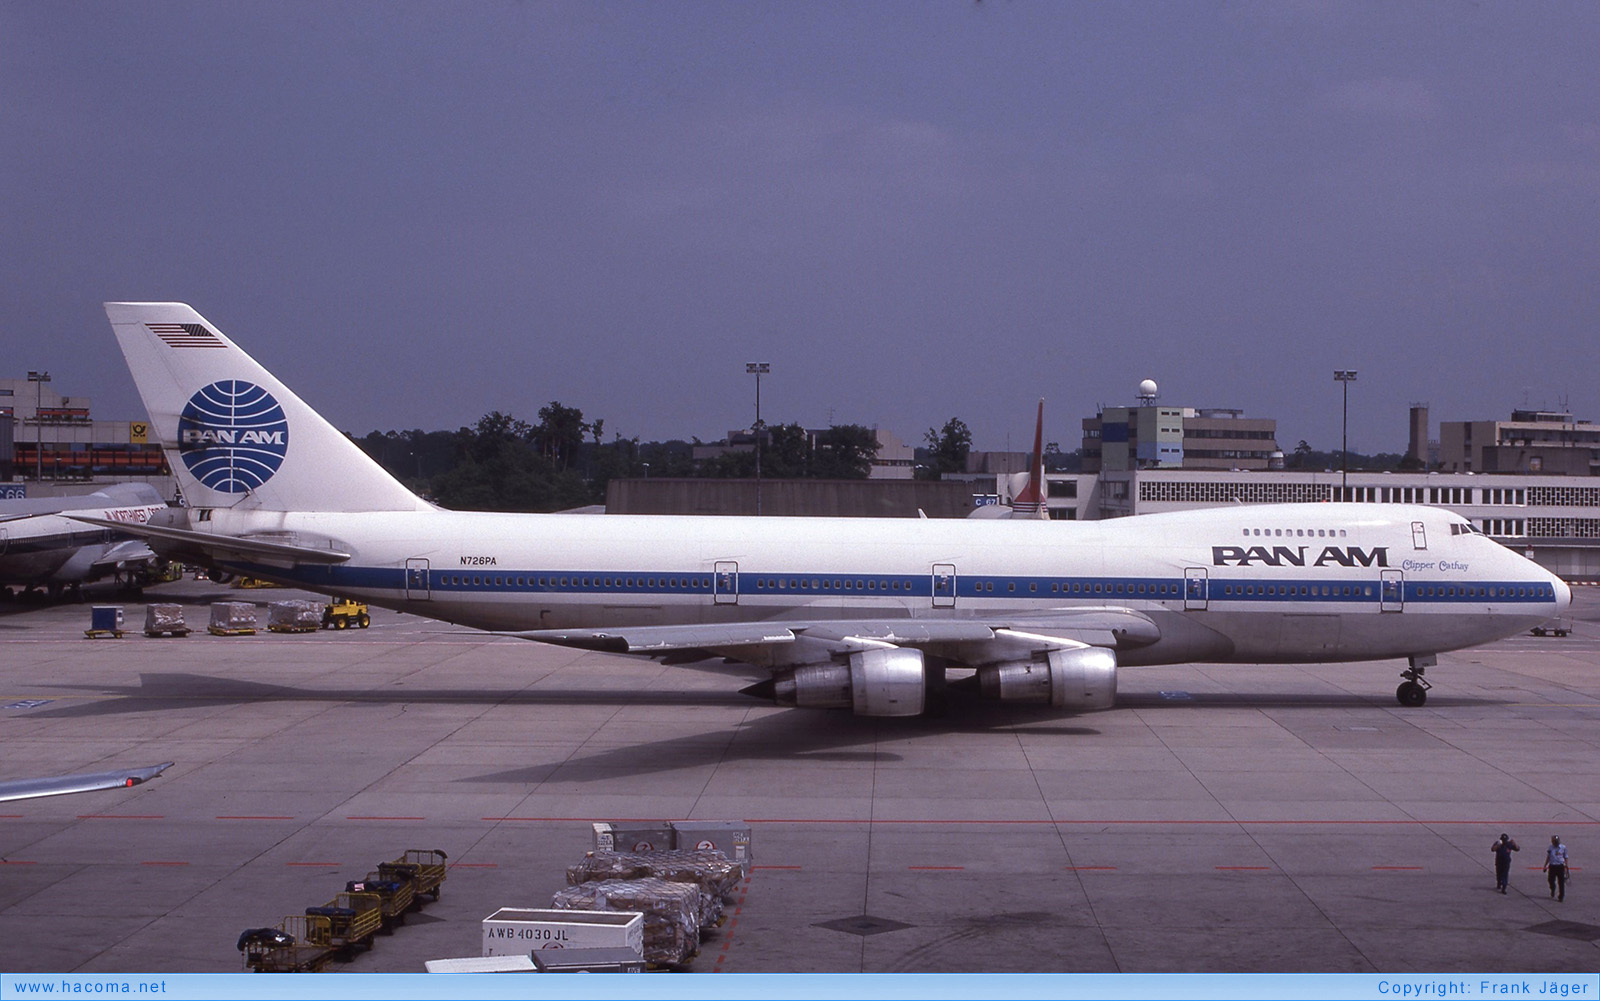 Photo of N726PA - Pan Am Clipper Cathay - Frankfurt International Airport - Jun 14, 1986